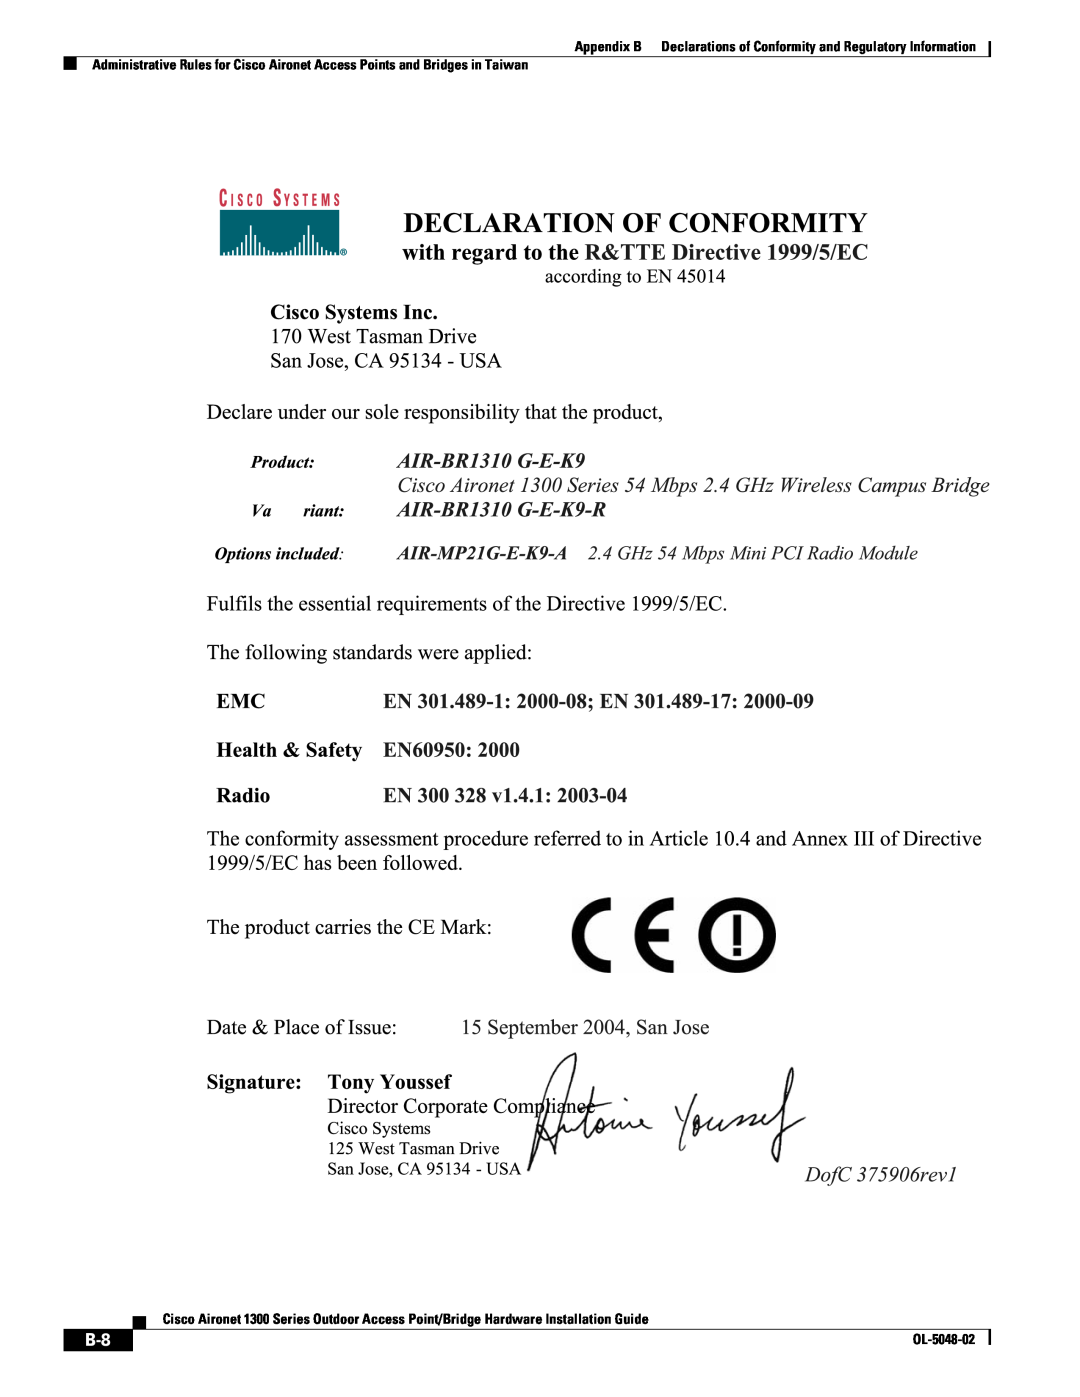 Cisco Systems 1300 Series manual Appendix B Declarations of Conformity and Regulatory Information 